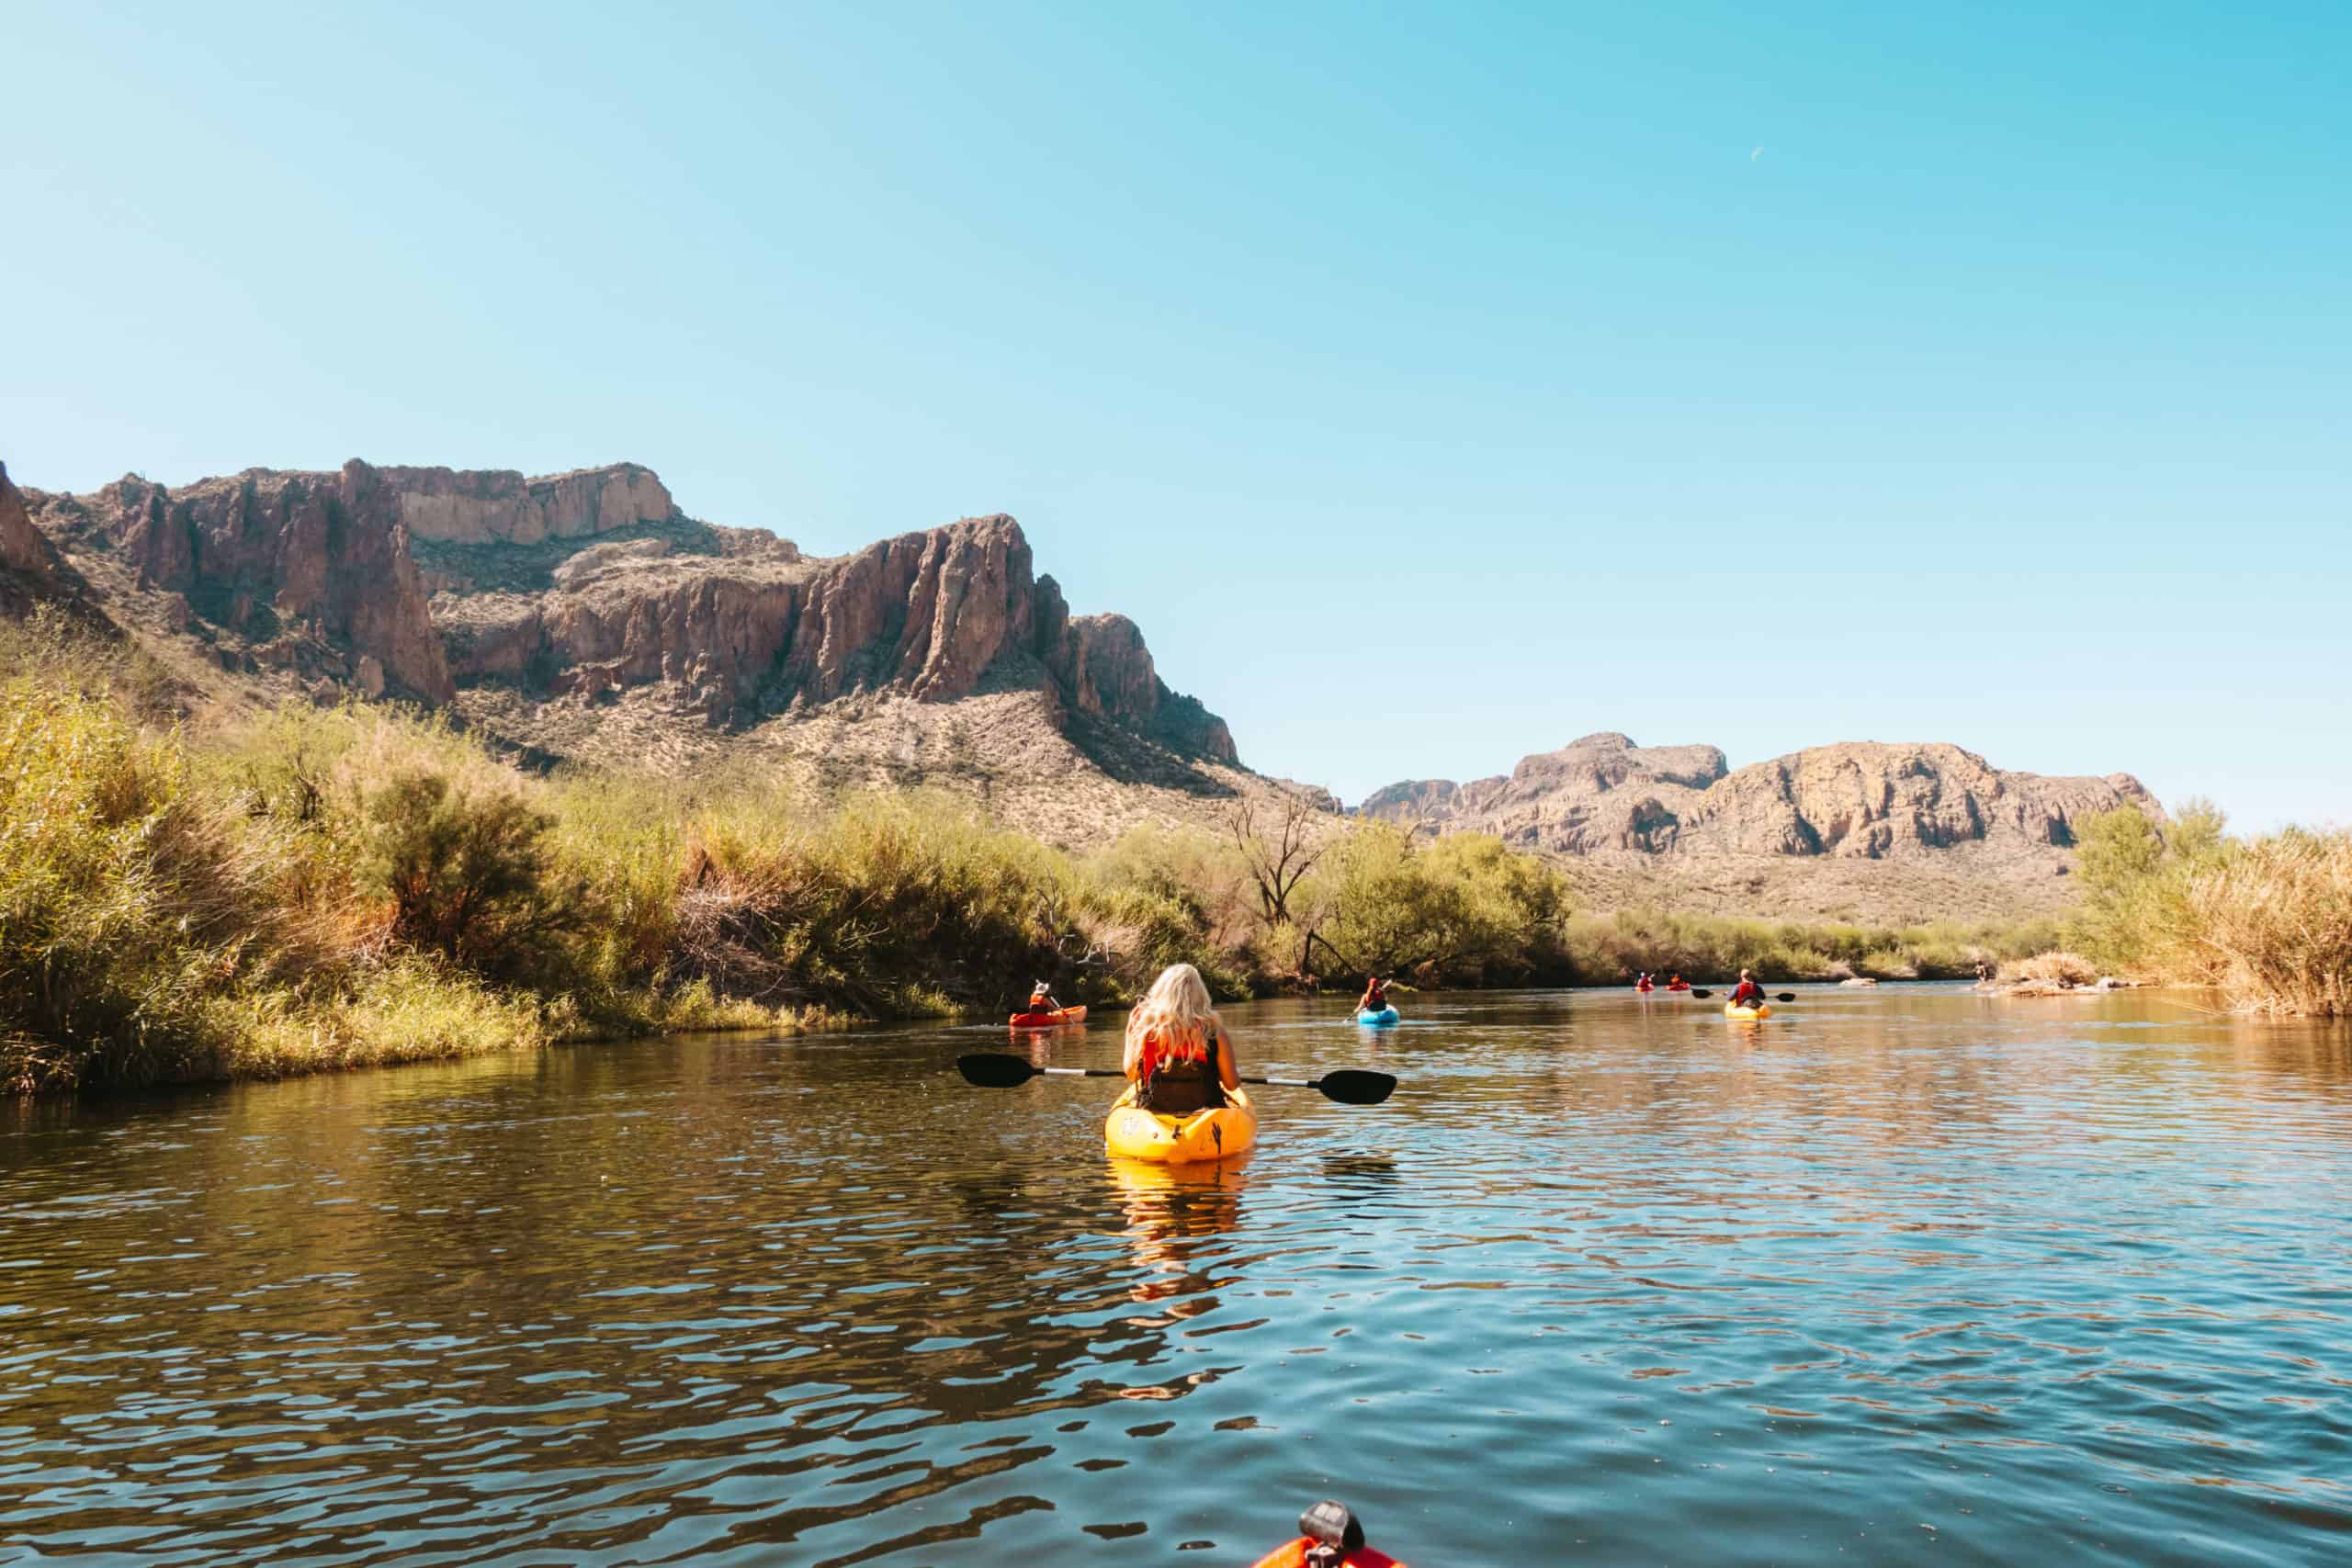 Kayaking the Salt River in Phoenix, Arizona